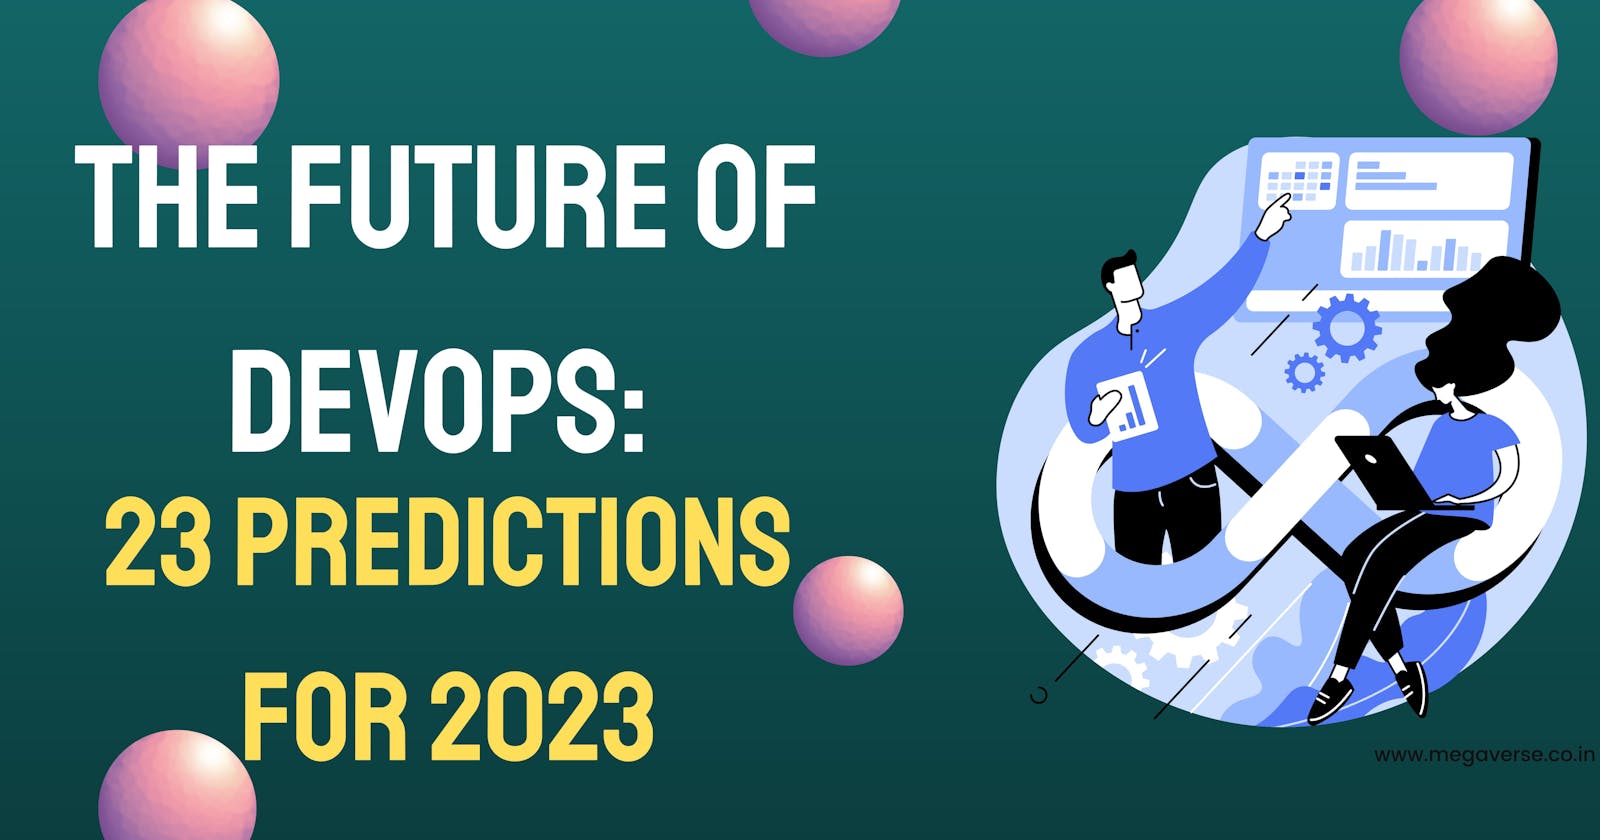 The future of DevOps: 23 predictions for 2023